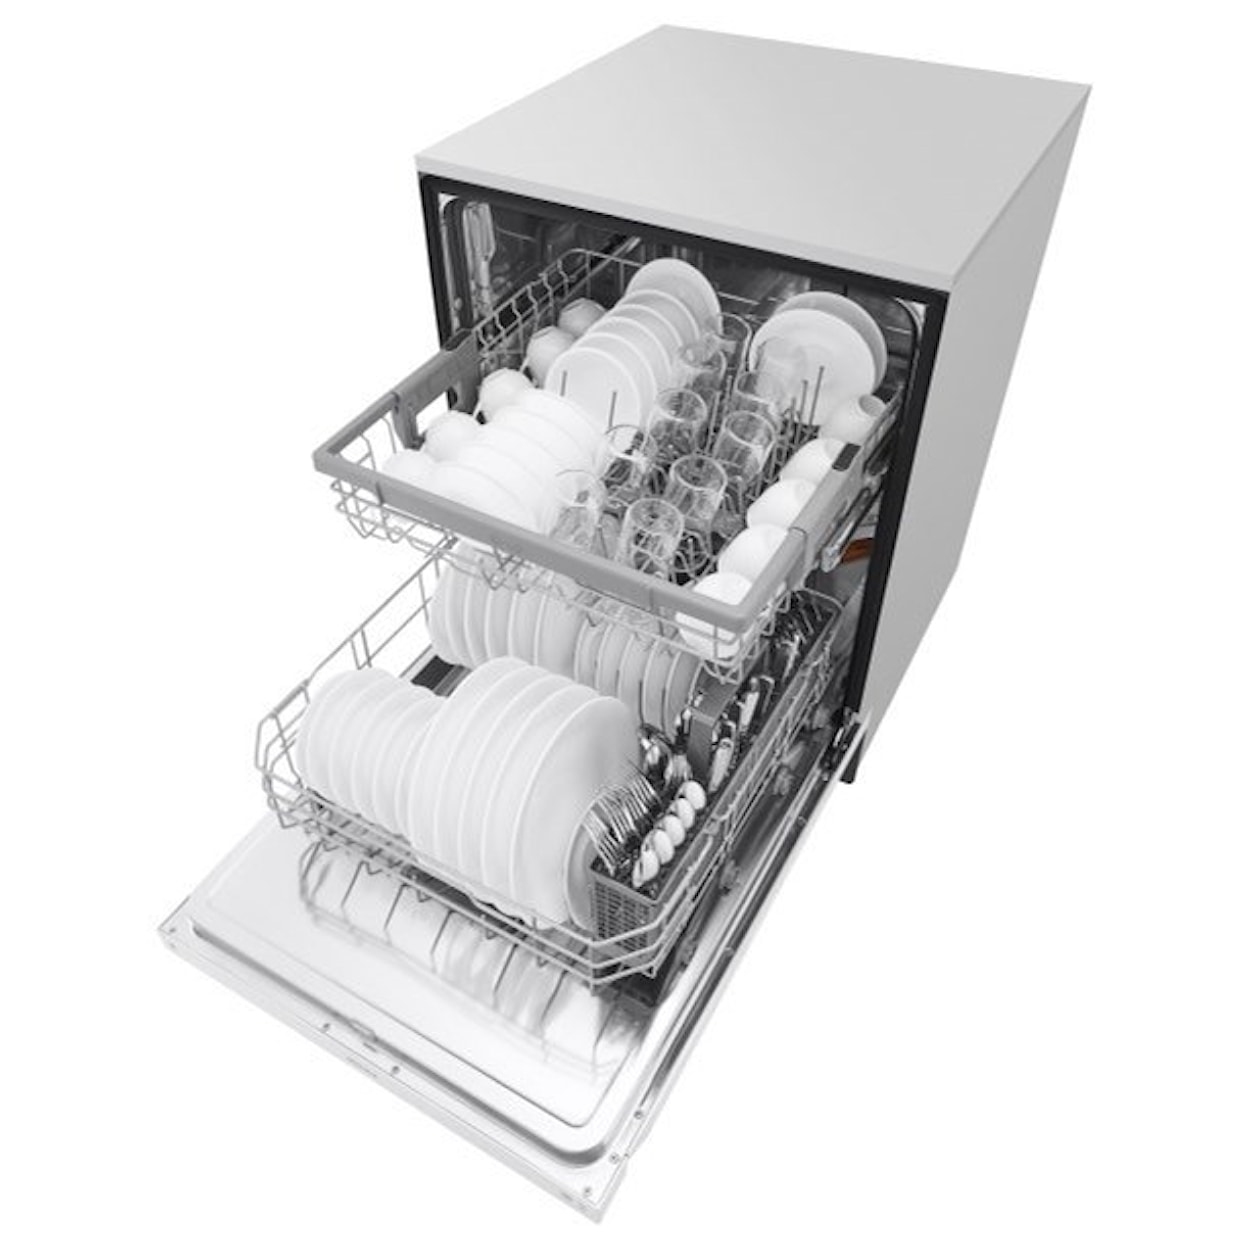 LG Appliances Dishwashers- LG Front Control QuadWash™ Dishwasher